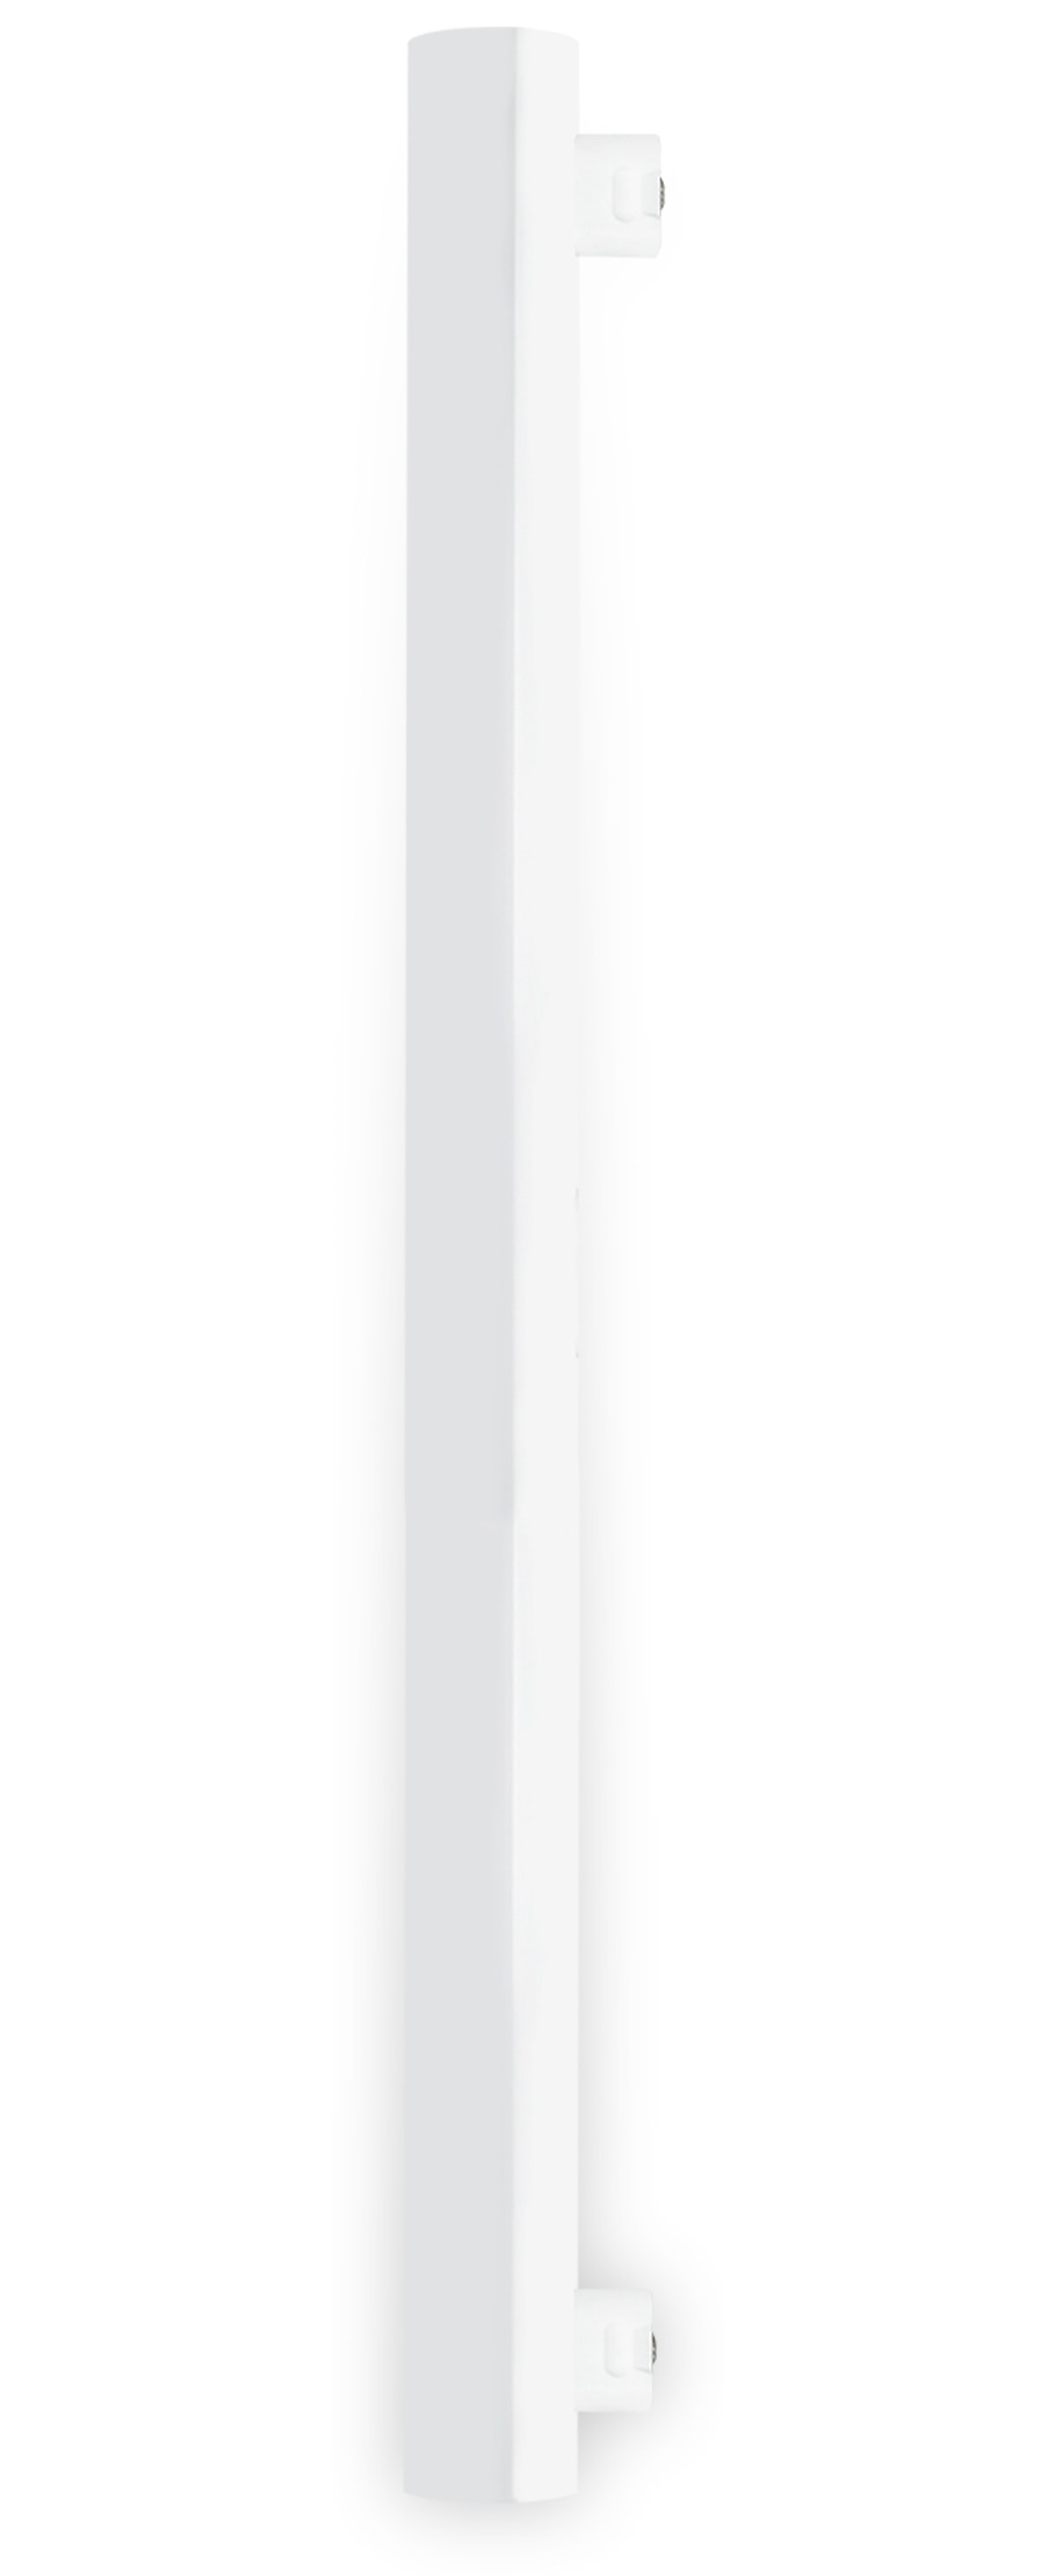 BLULAXA LED-Linienlampe 47522, EEK: G, 50 cm, 8,5 W, 700 lm, S14S